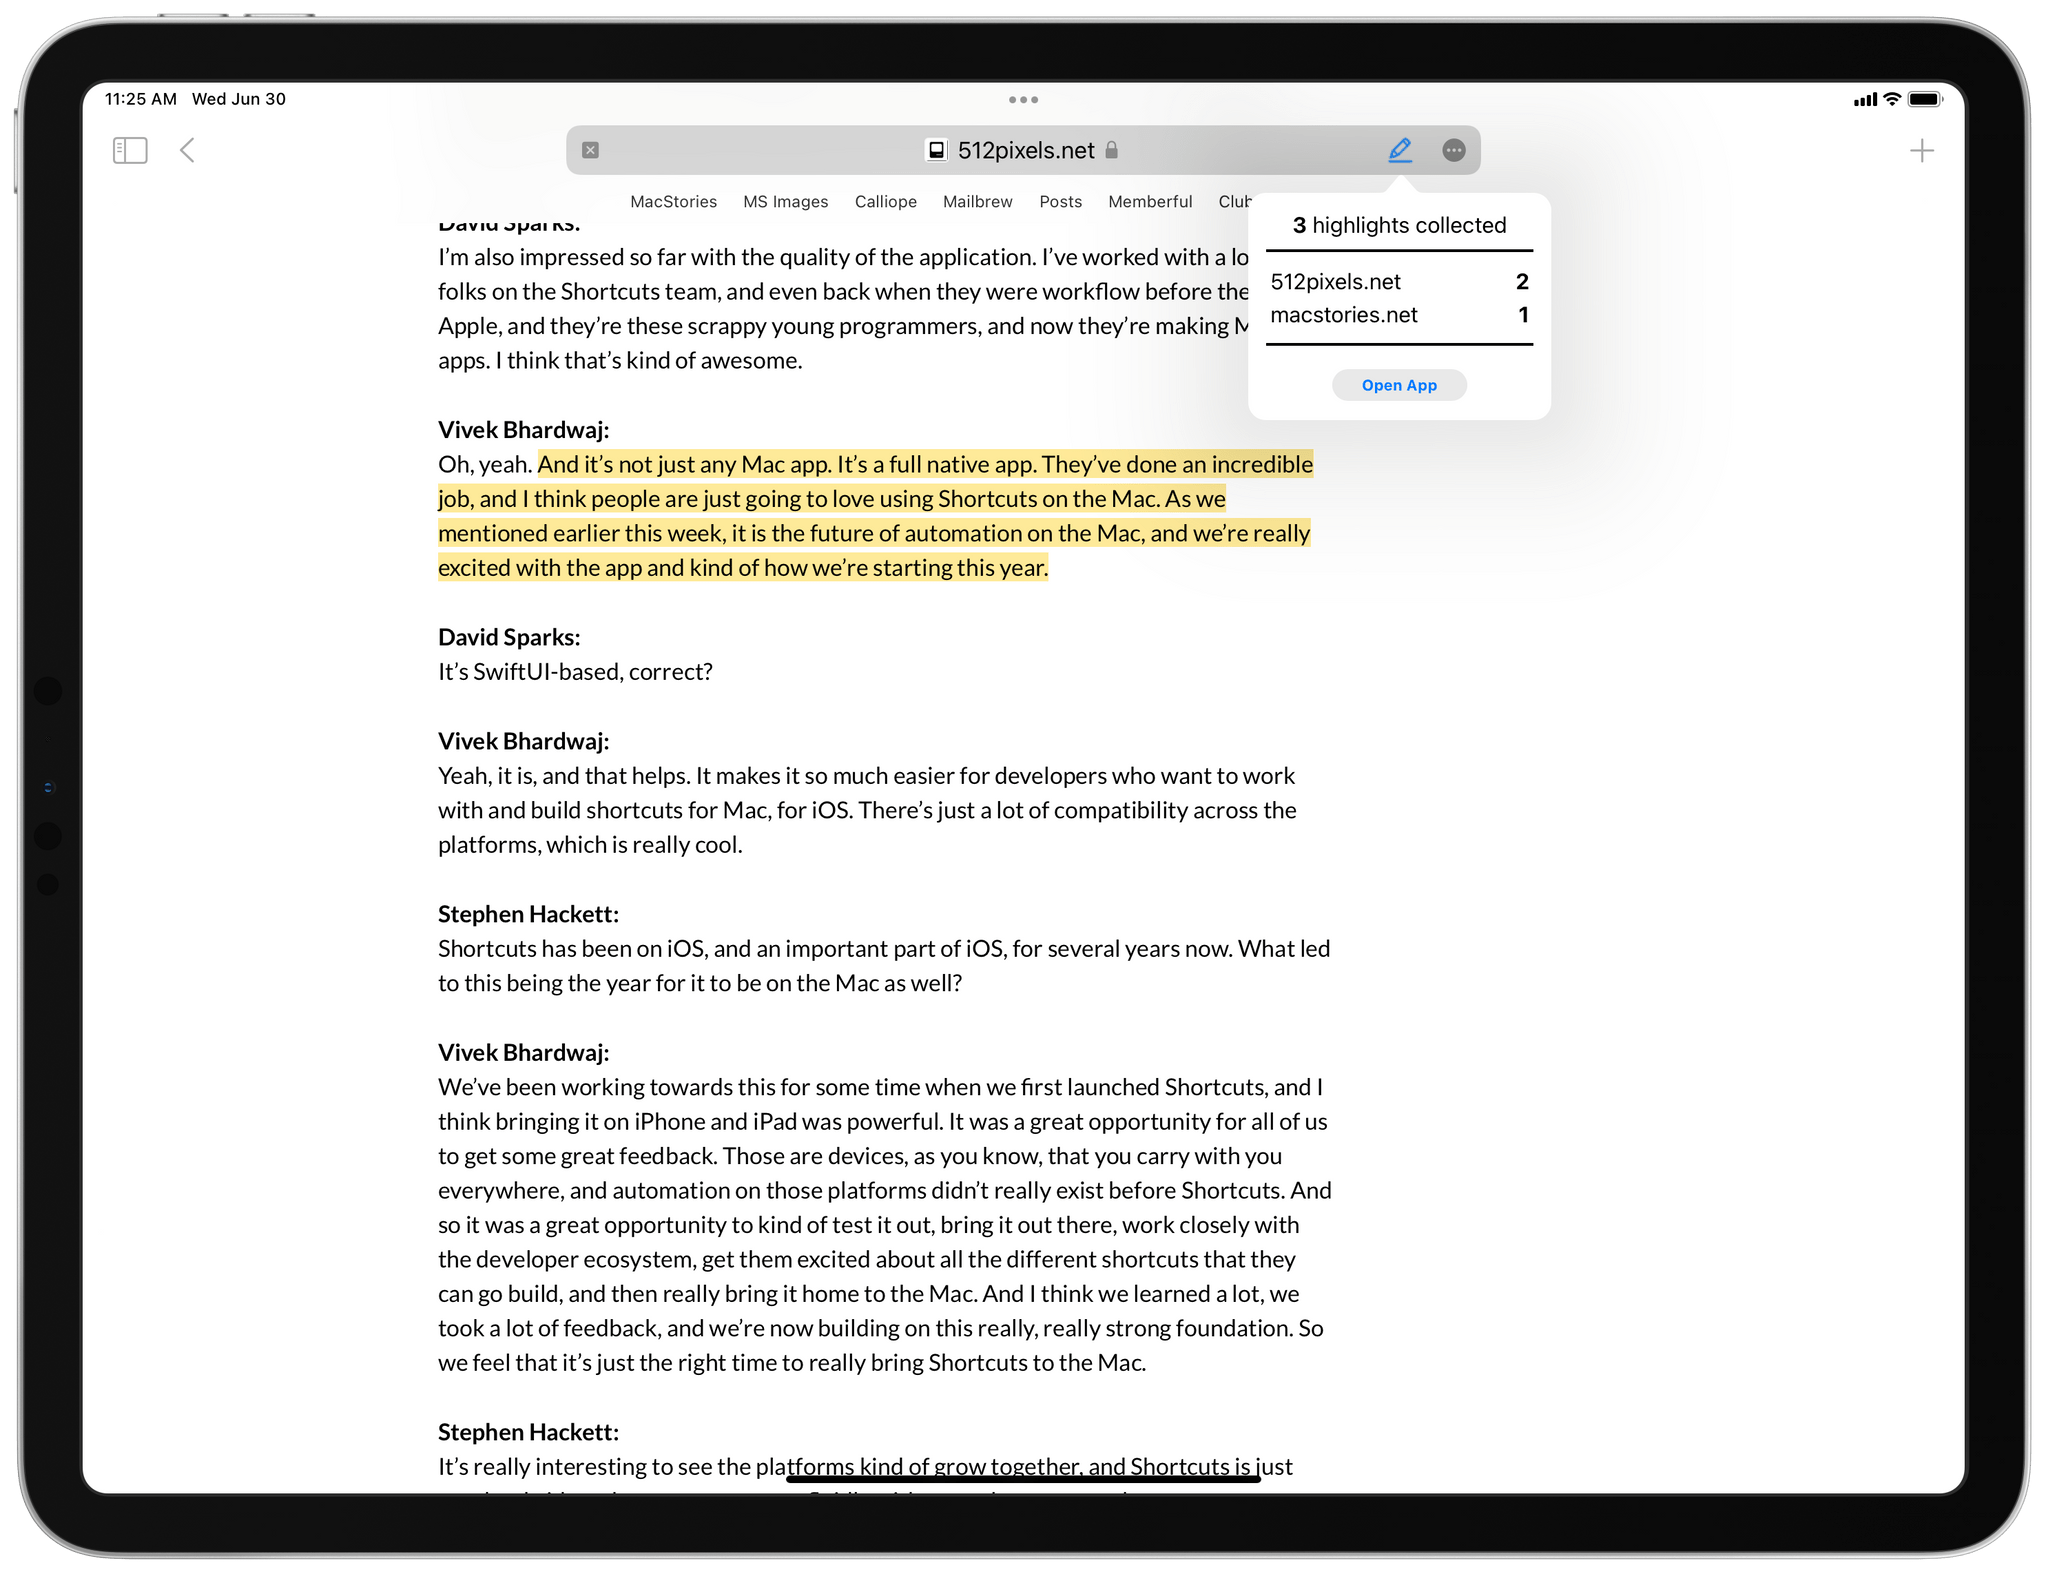 Safari web extensions can display popups on iPad.